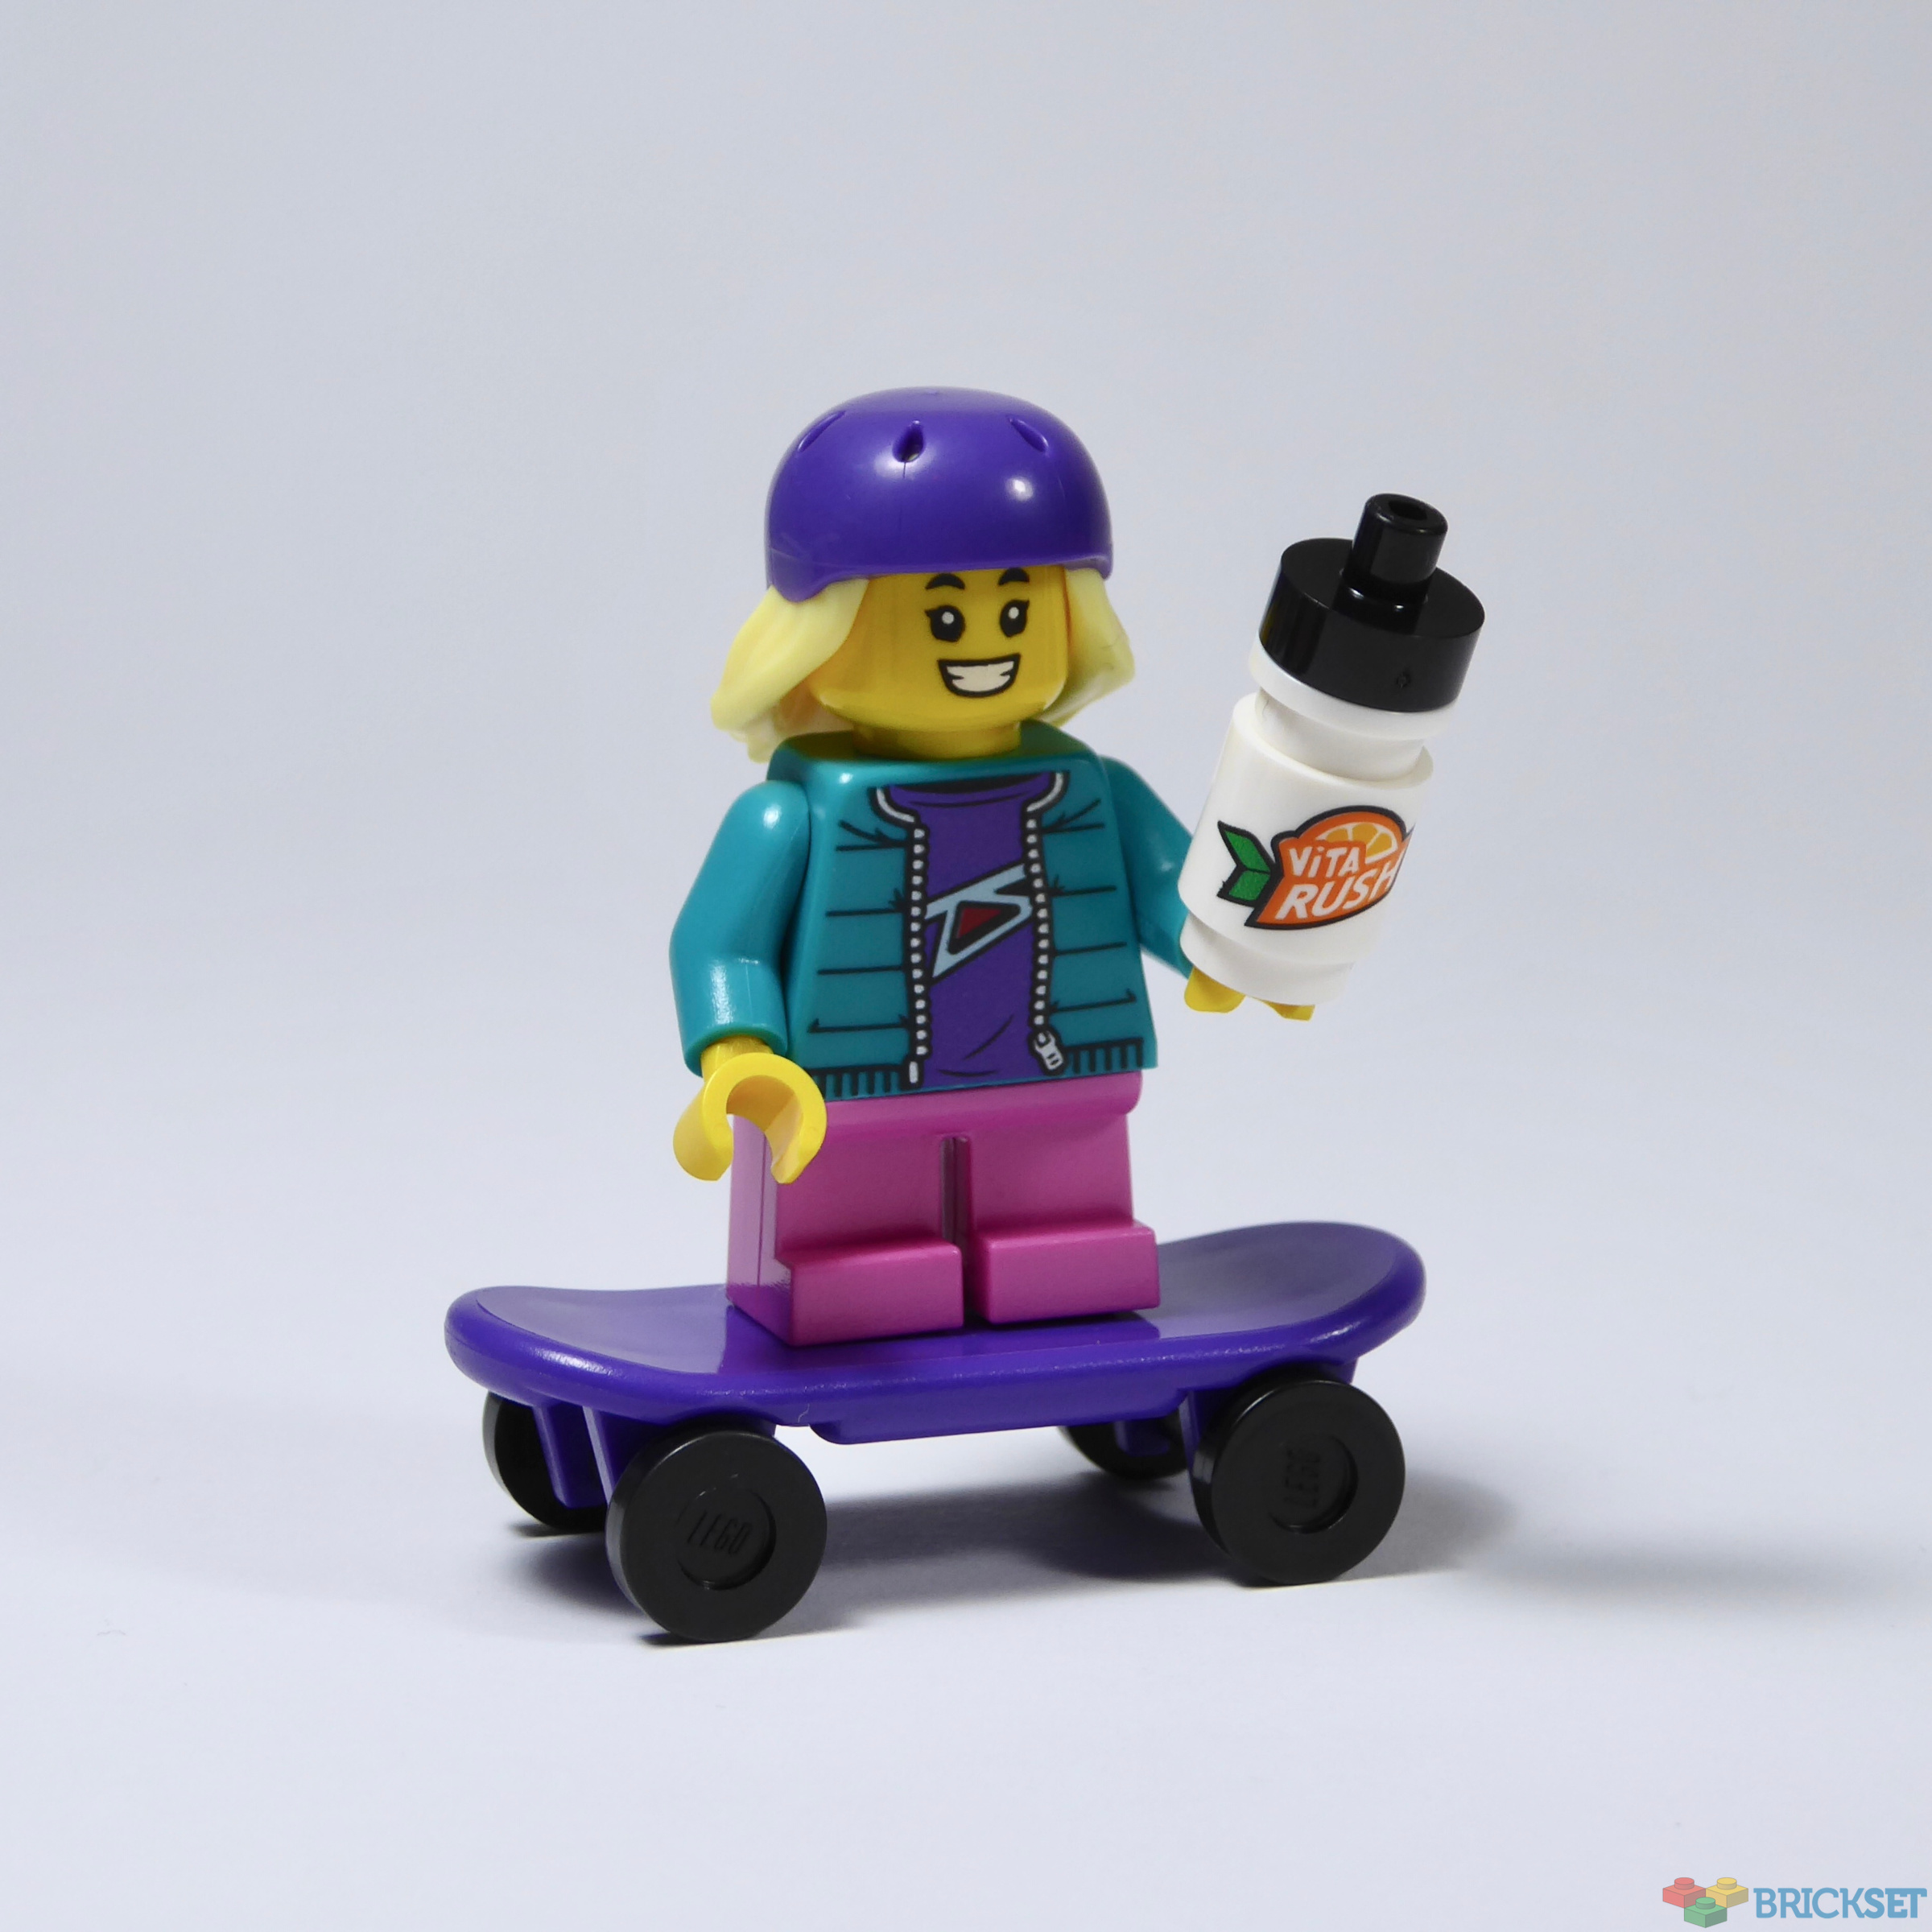 NEW Lego City Minifig ORANGE SKATEBOARD Boy/Girl Minifigure Skate Board Toy